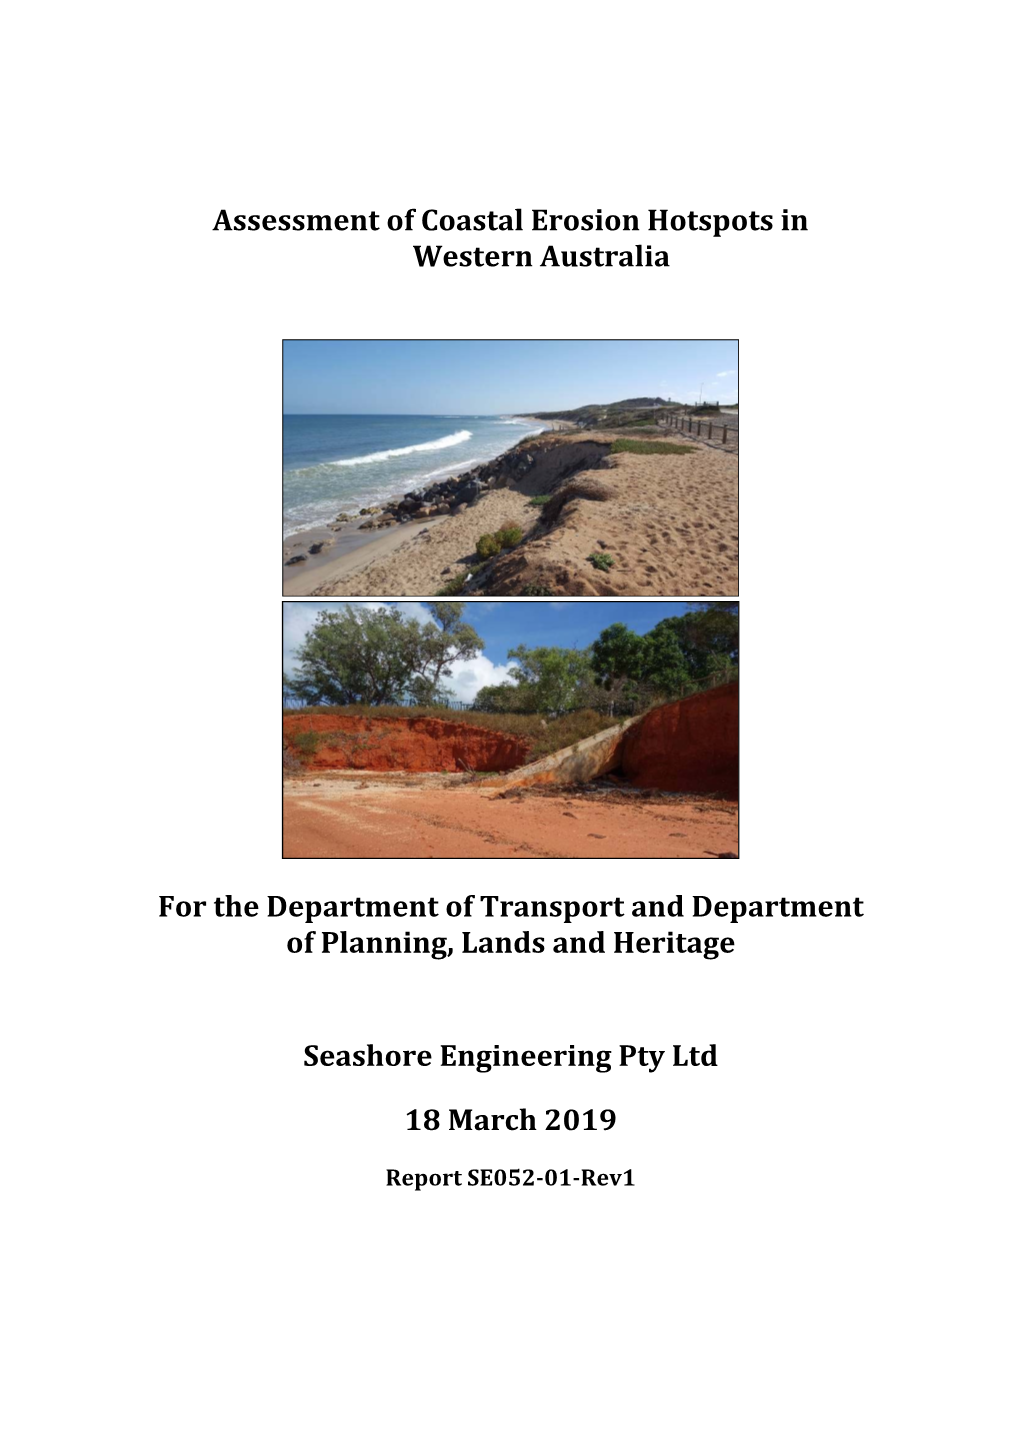 Assessment of Coastal Erosion Hotspots in Western Australia